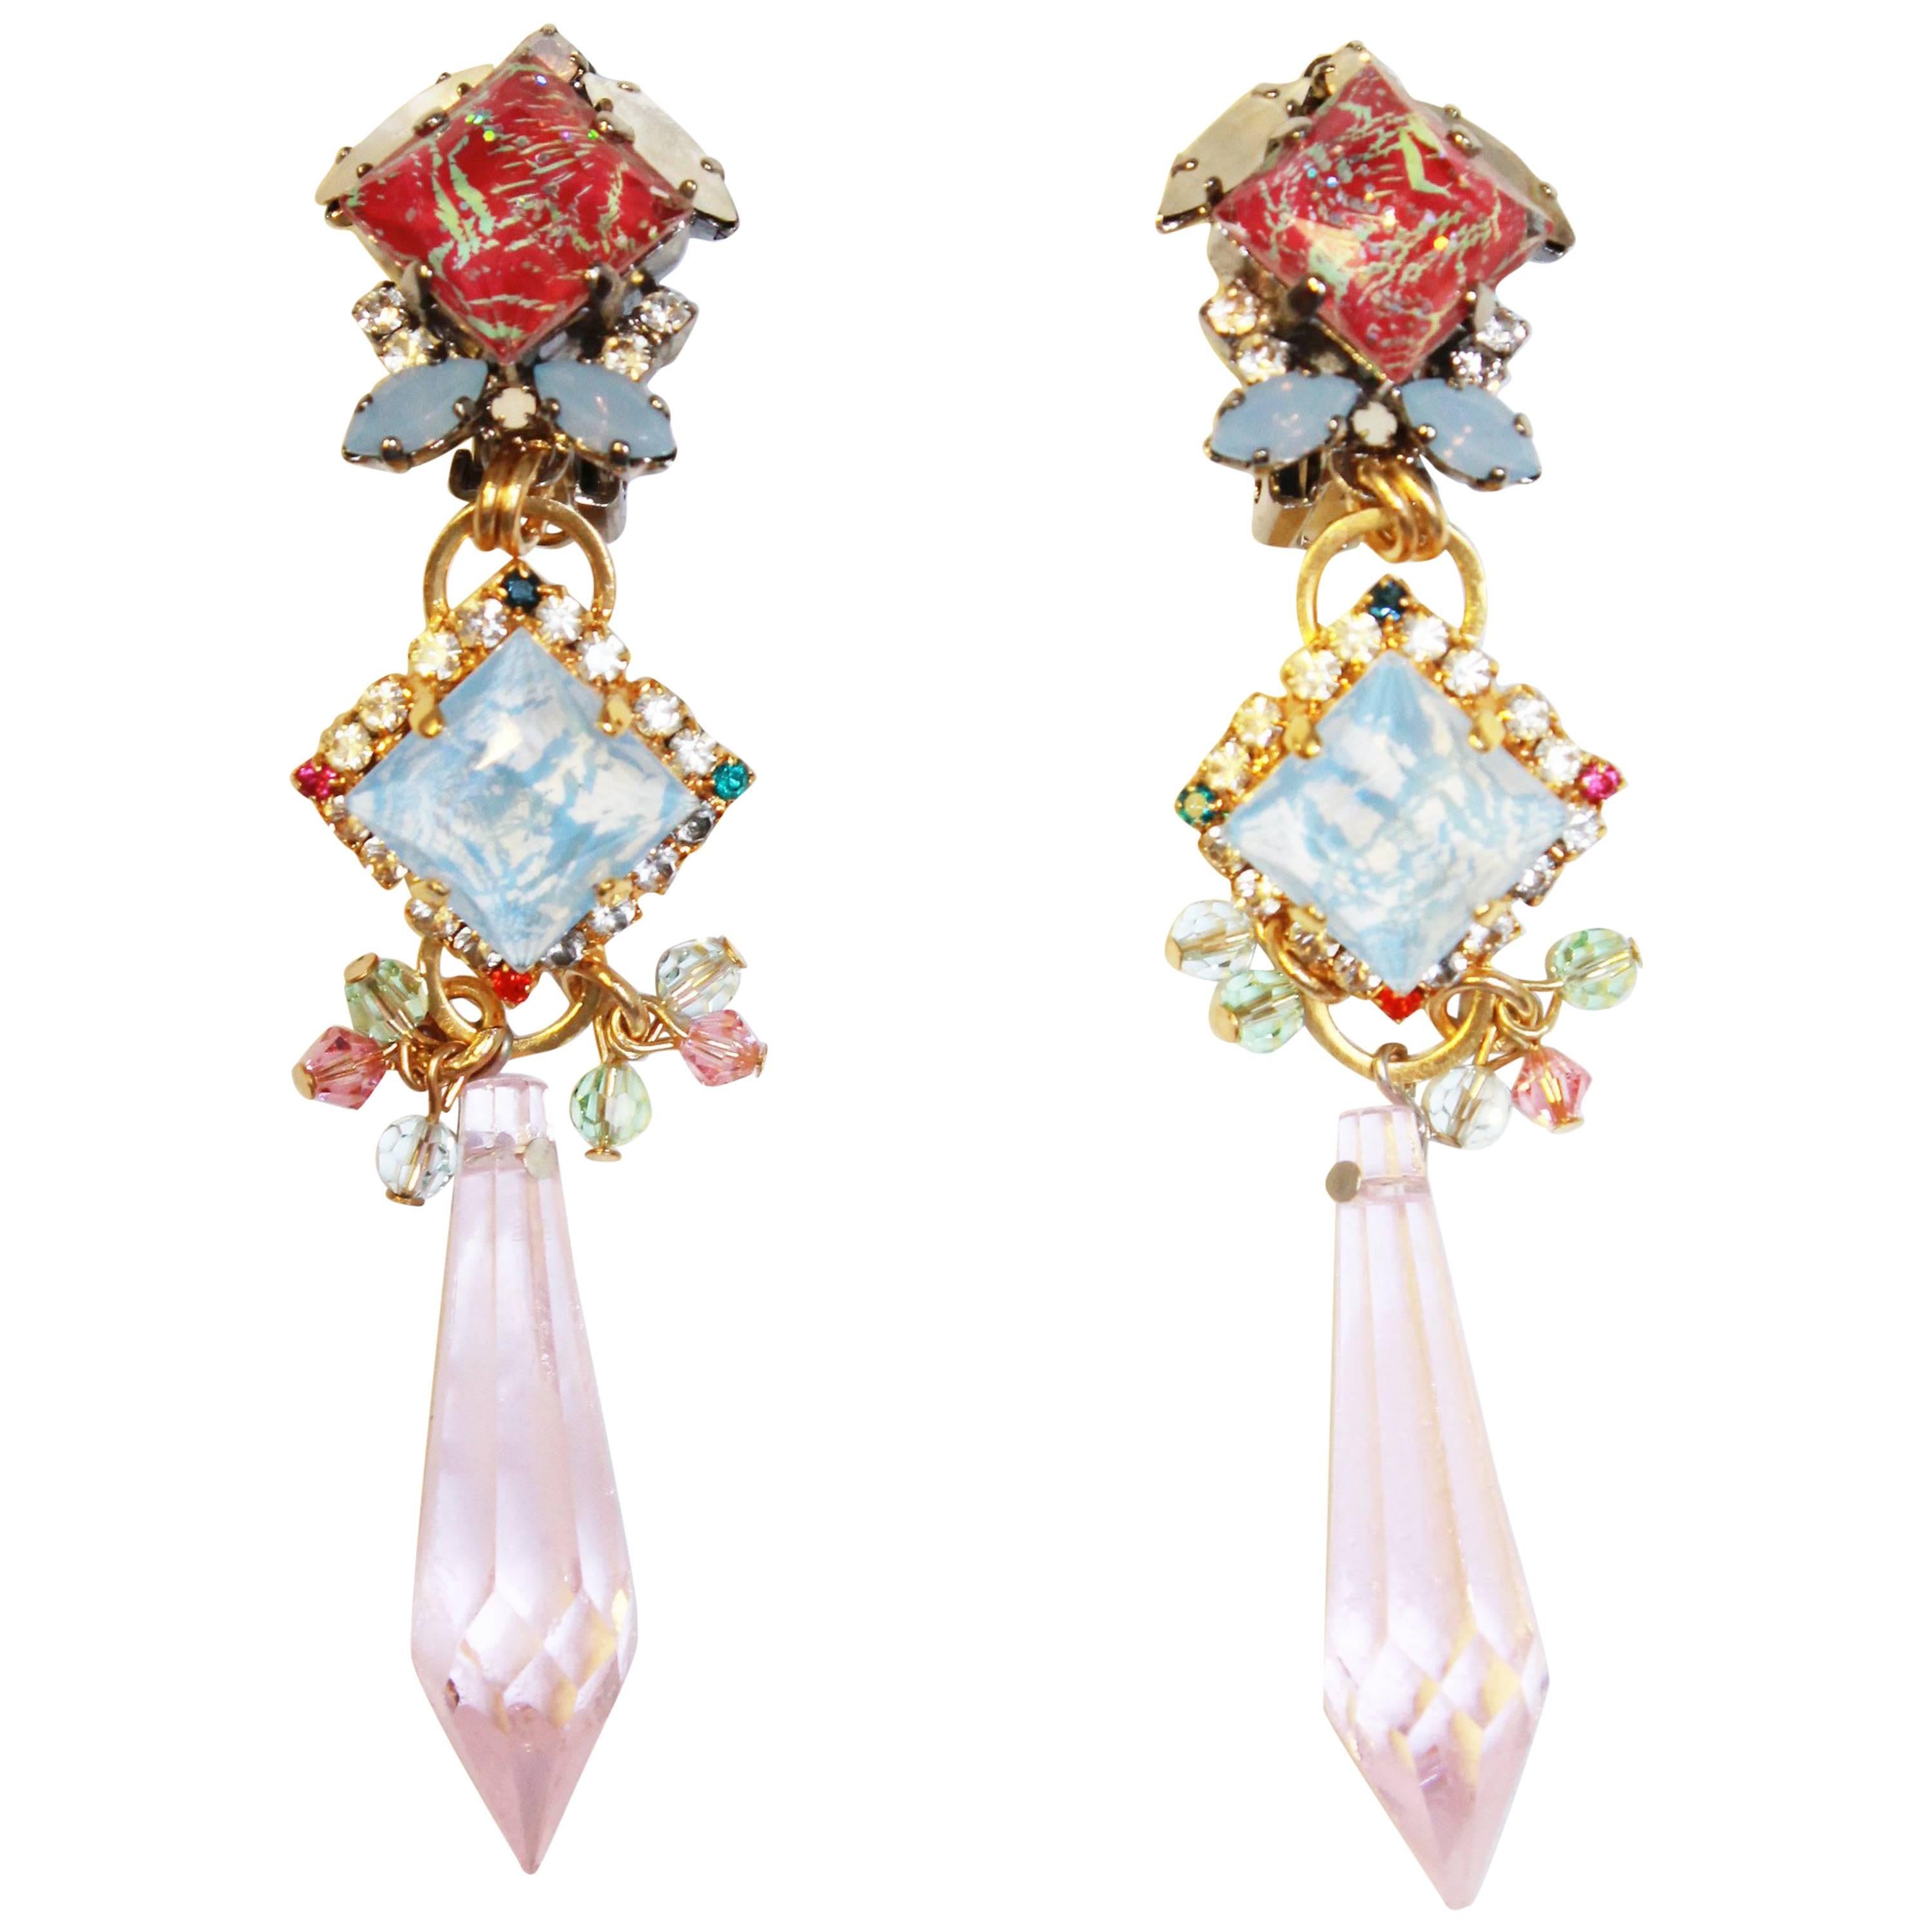 Beautiful Shocking Pink, Pale Pink and Blue Swarovski Crystal Drop Earrings